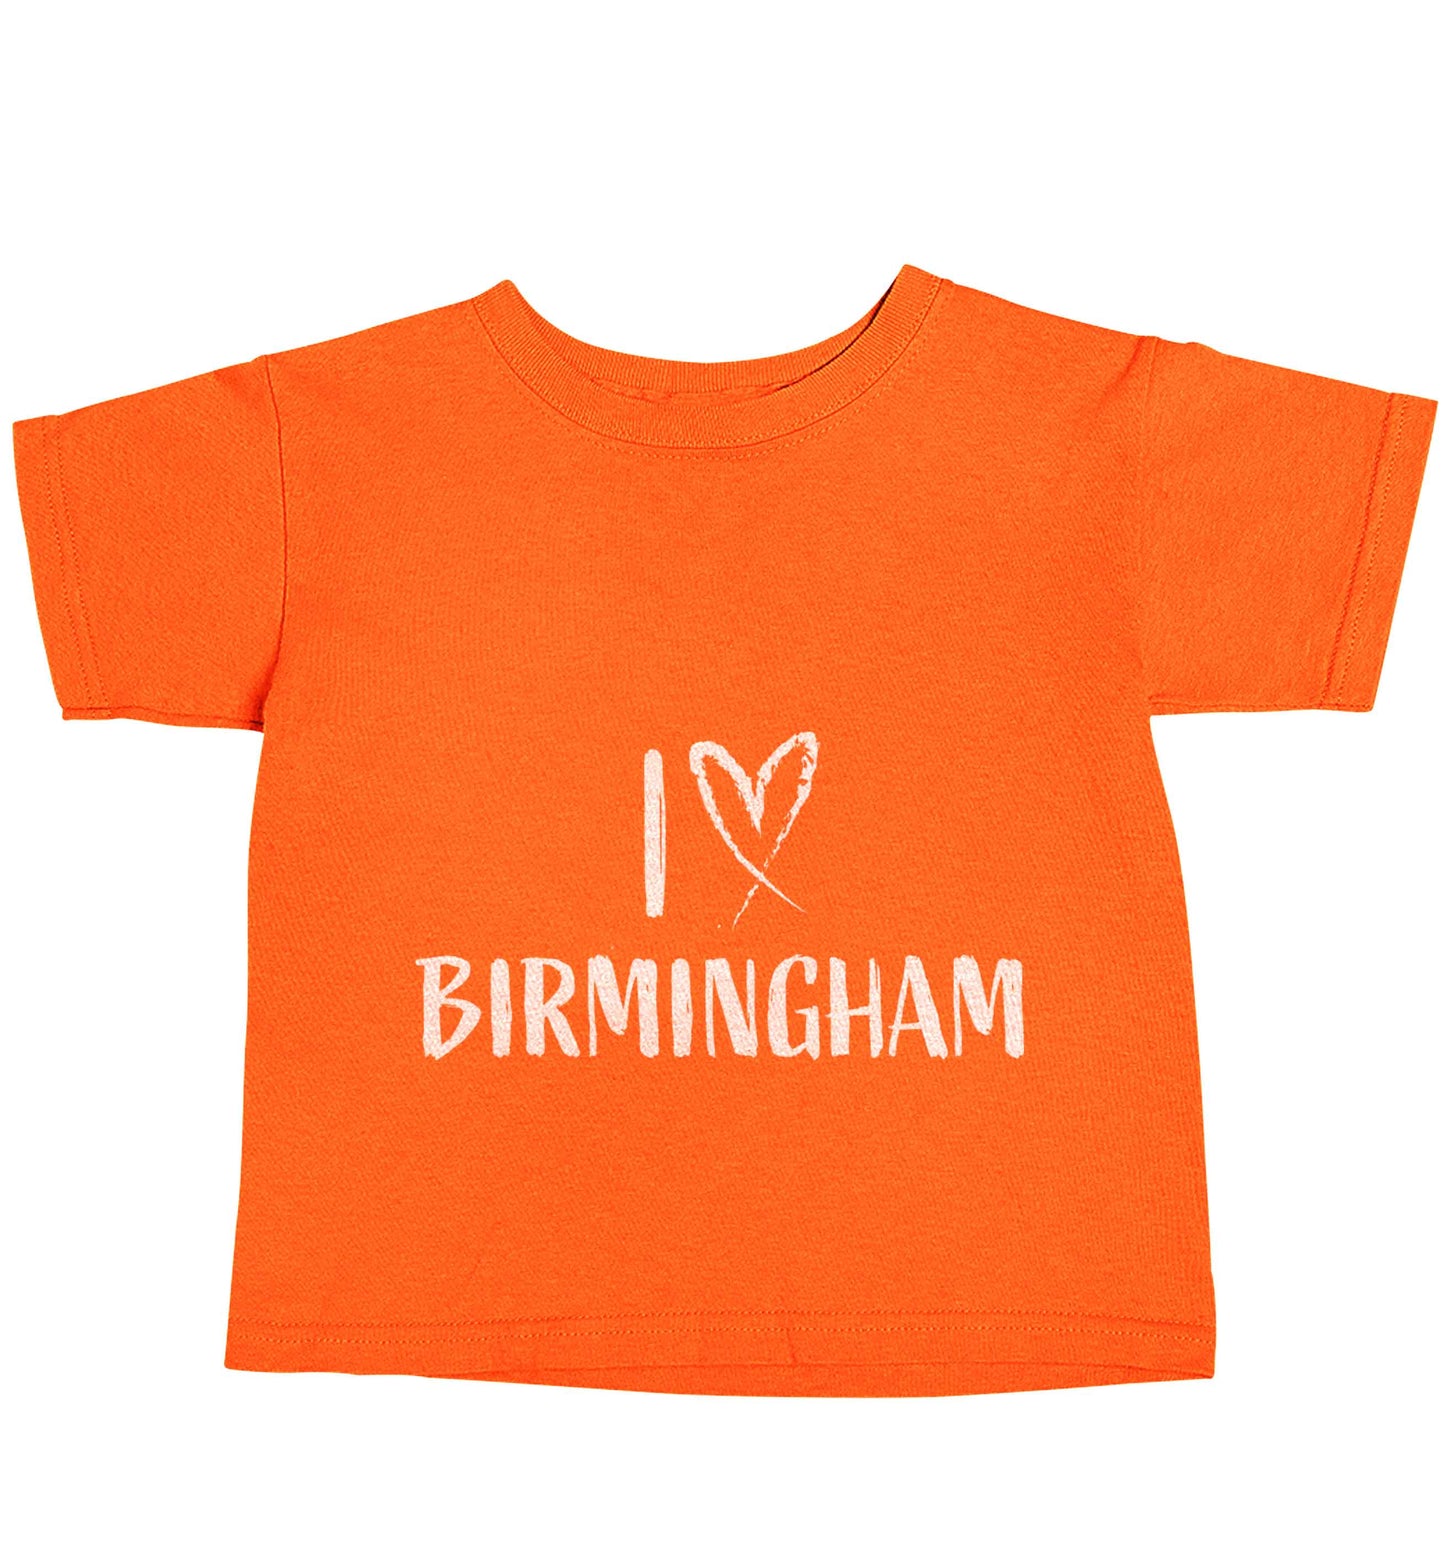 I love Birmingham orange baby toddler Tshirt 2 Years